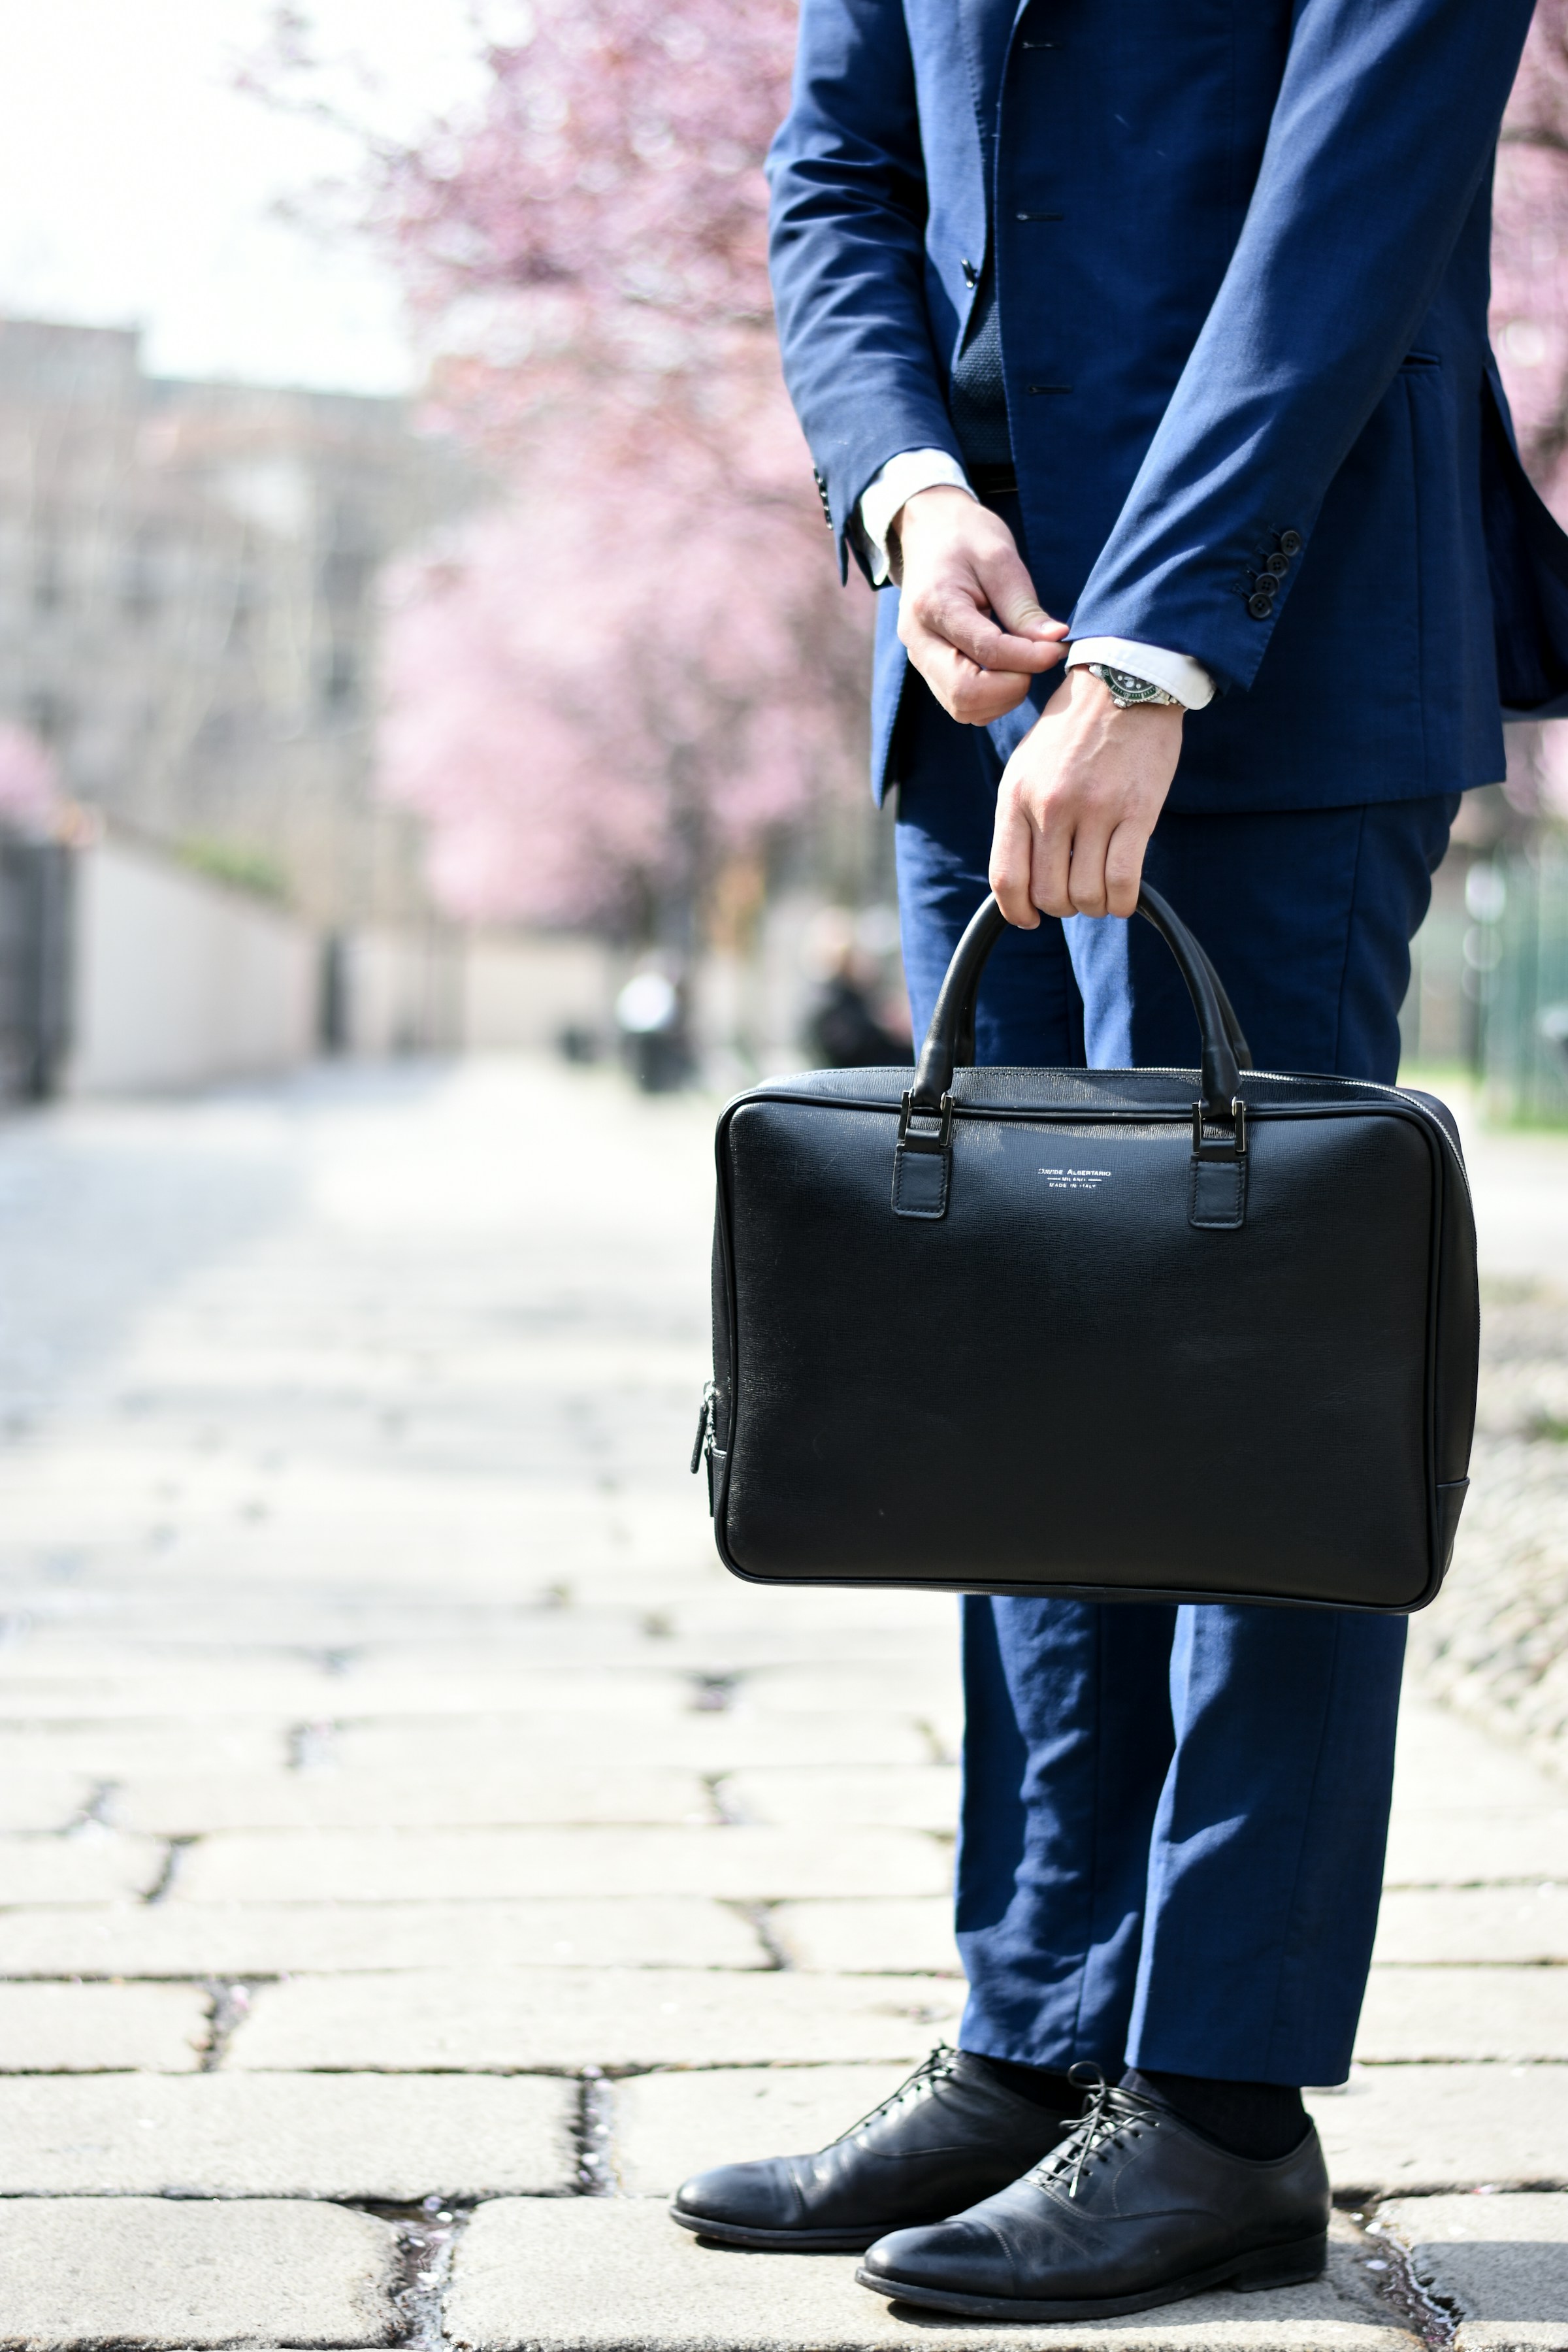 A man holding a briefcase | Source: Unsplash